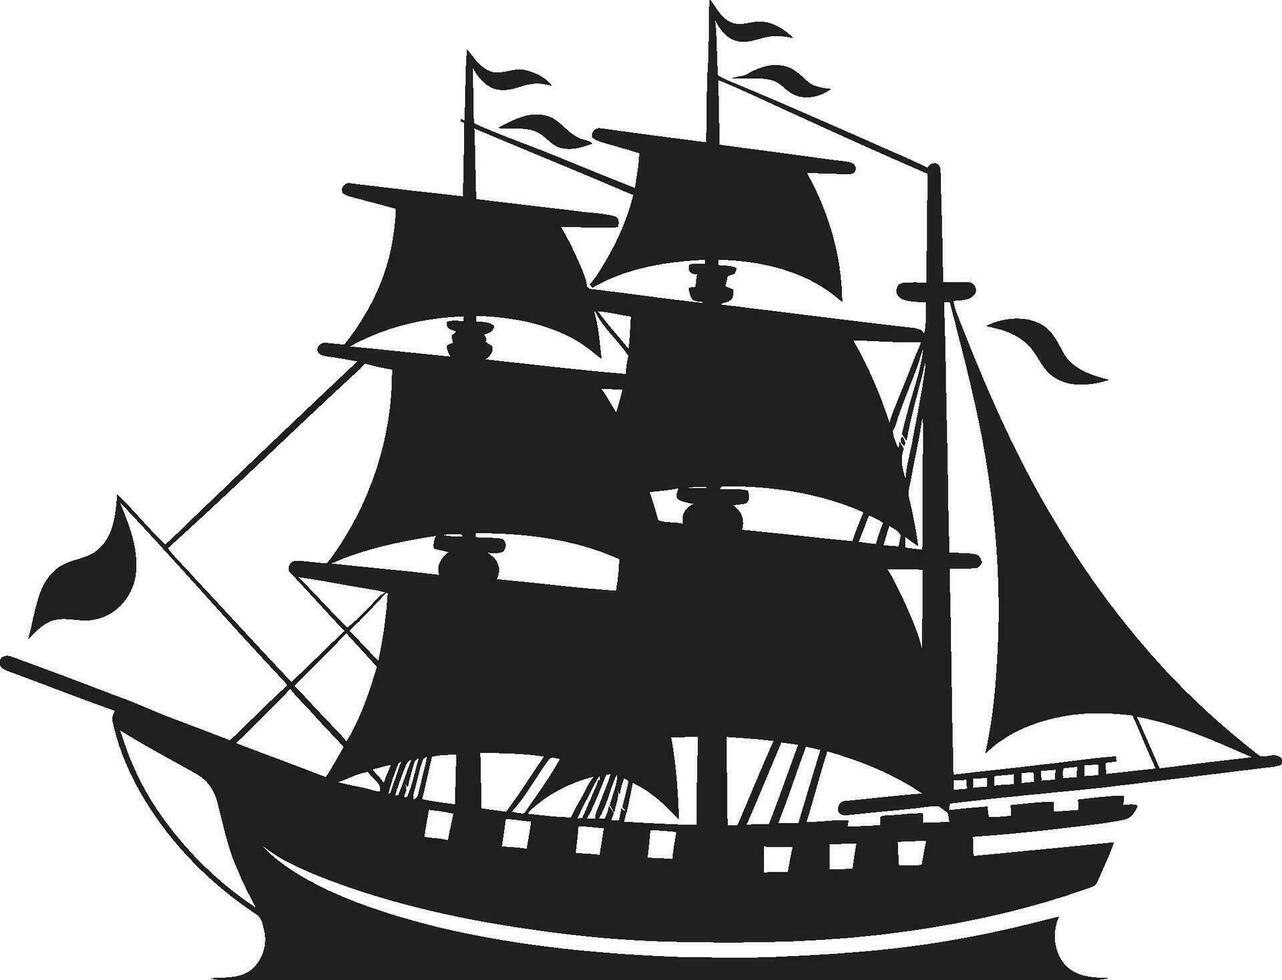 Nautical Heritage Ancient Ship Emblem Legendary Seafarer Black Ship Vector